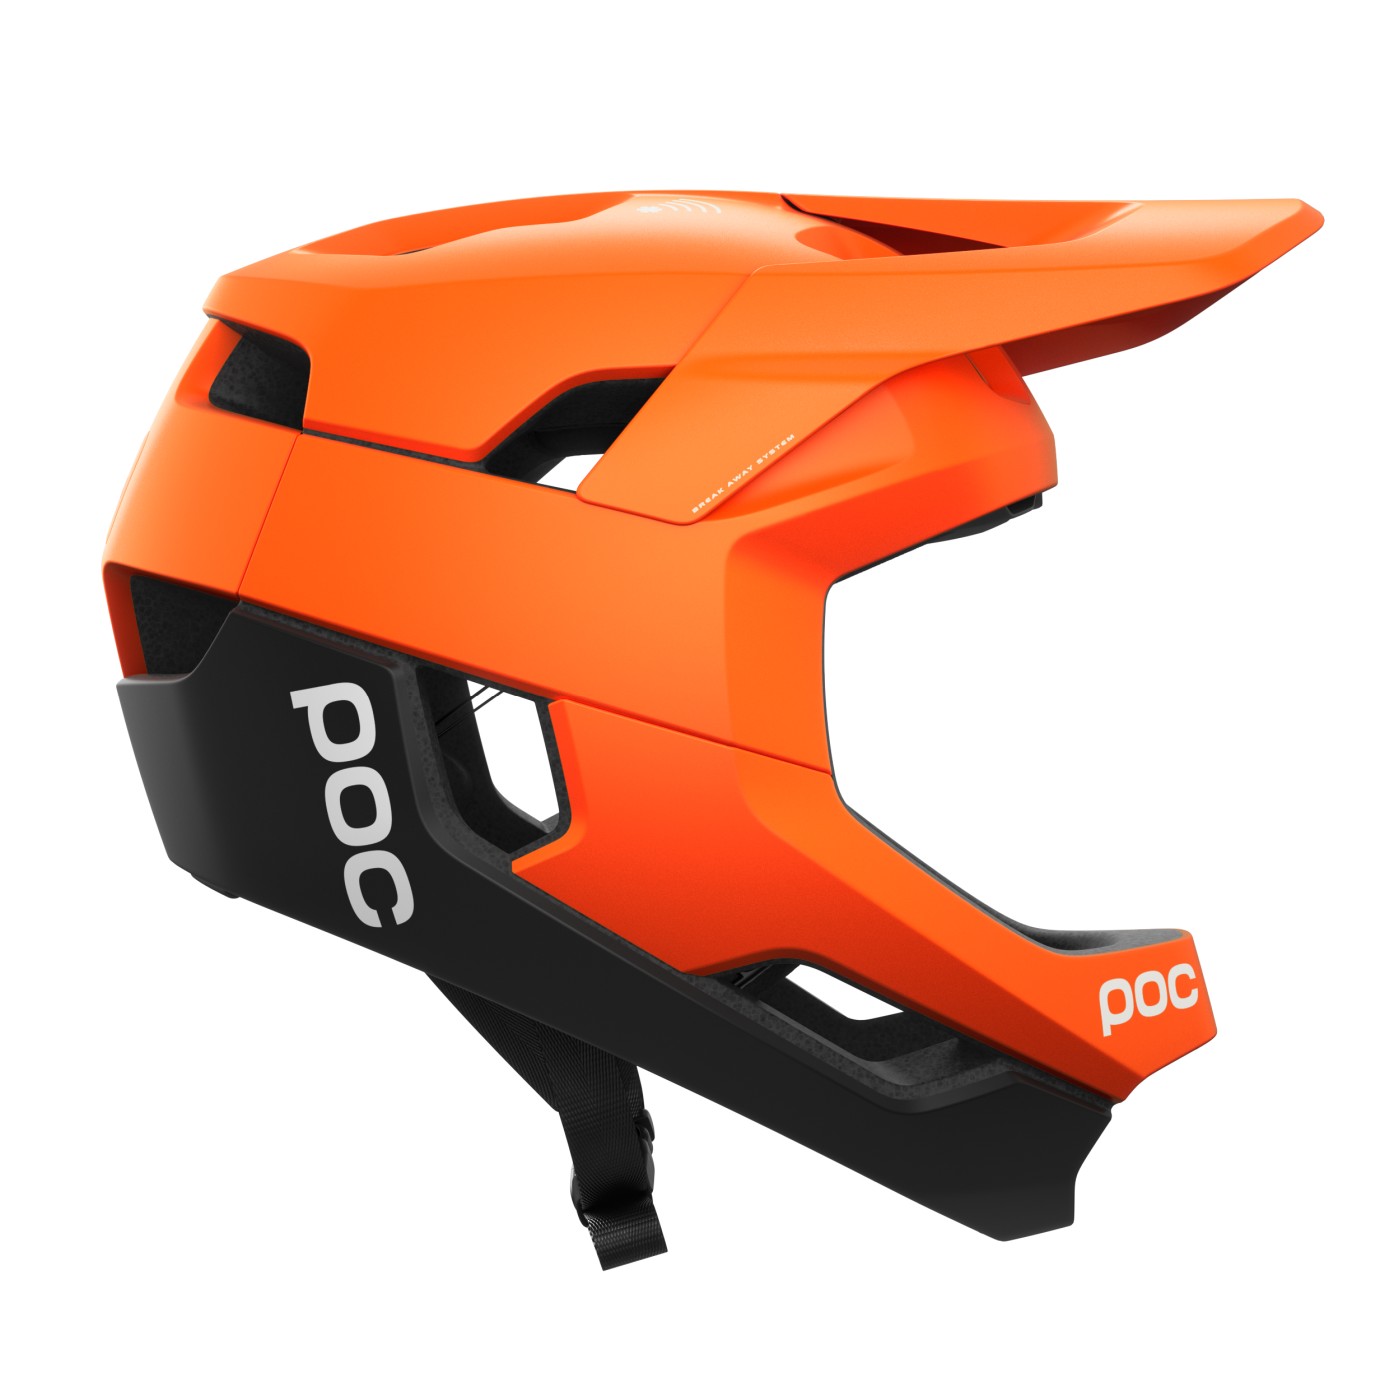 Nuevo casco integral de enduro POC Otocon, de solo 680 gramos